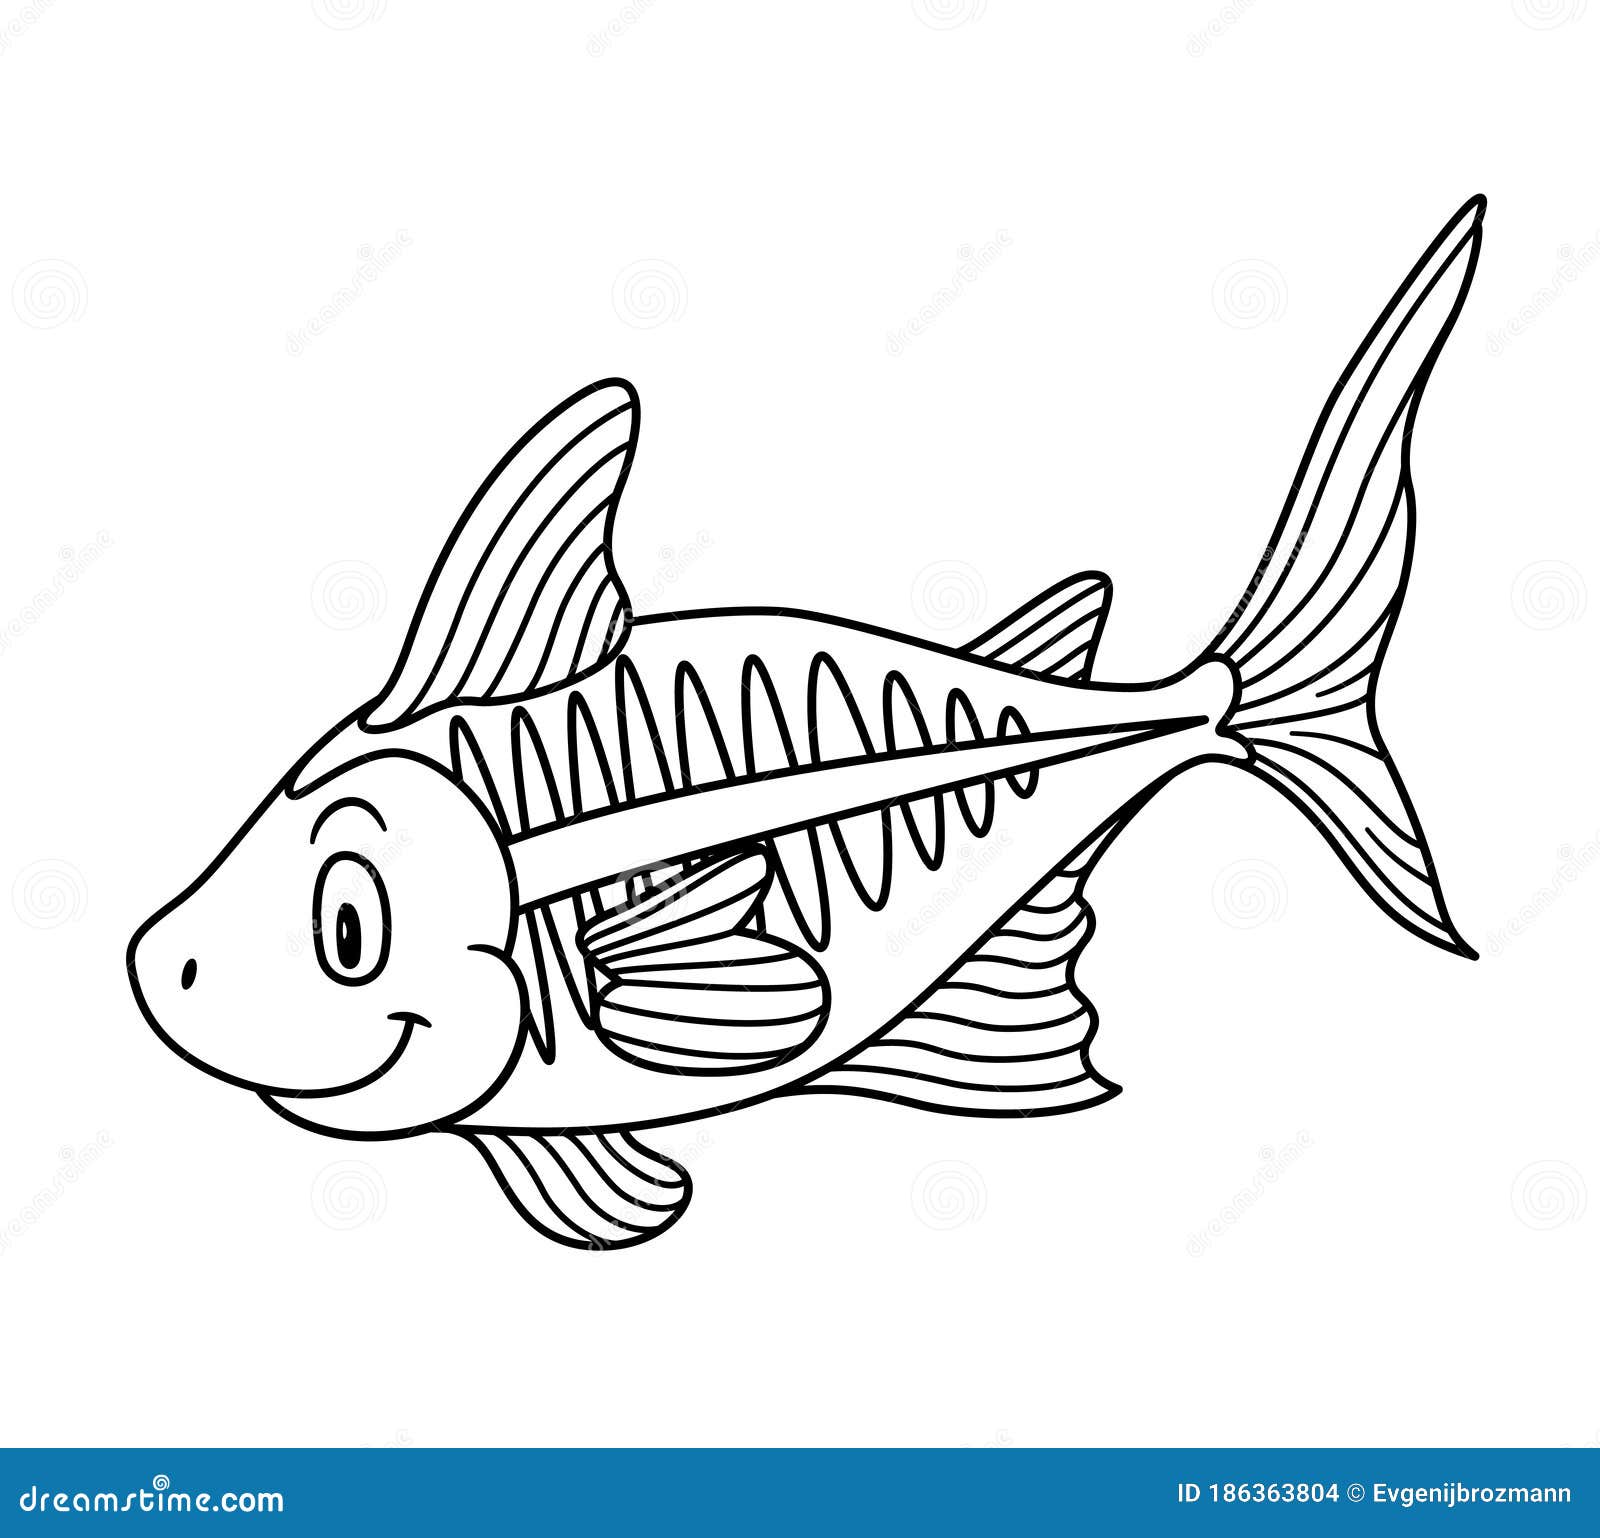 Cartoon Animal X-Ray Fish. Illustration. For Pre School Education